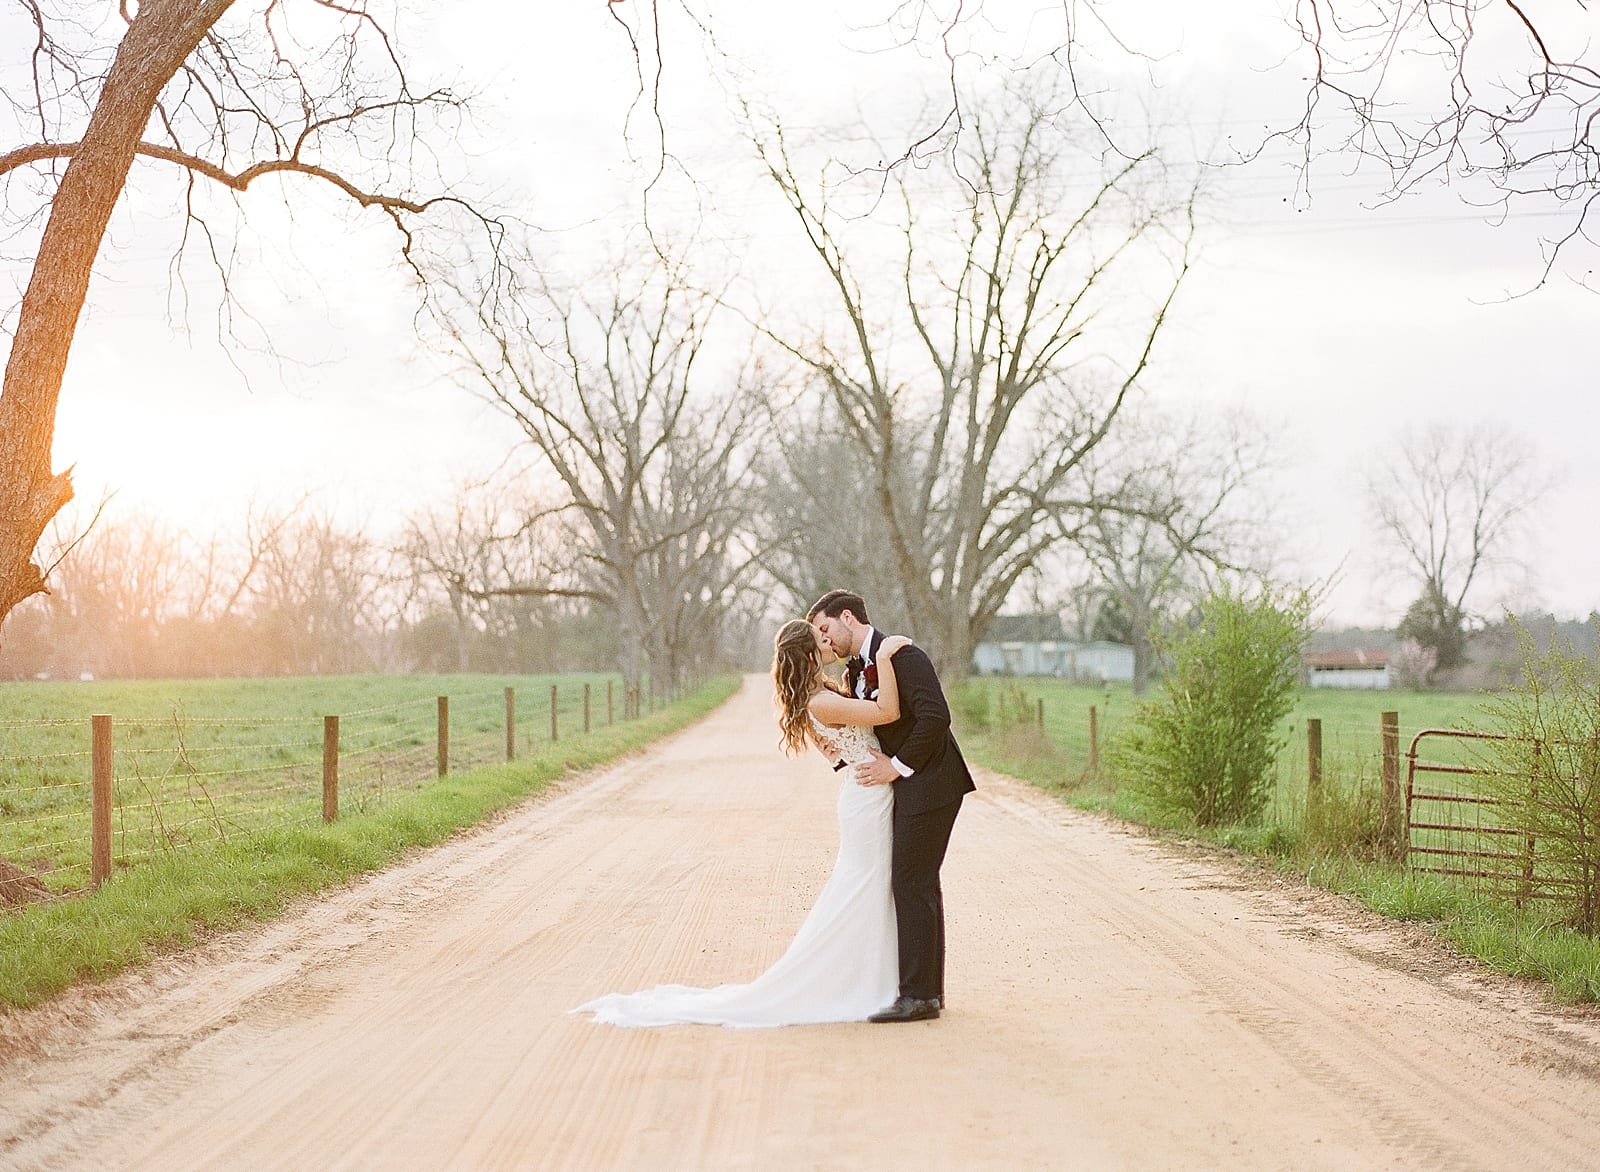 Savannah GA Wedding Photographer Bride and Groom Kissing on Dirt Road Photo